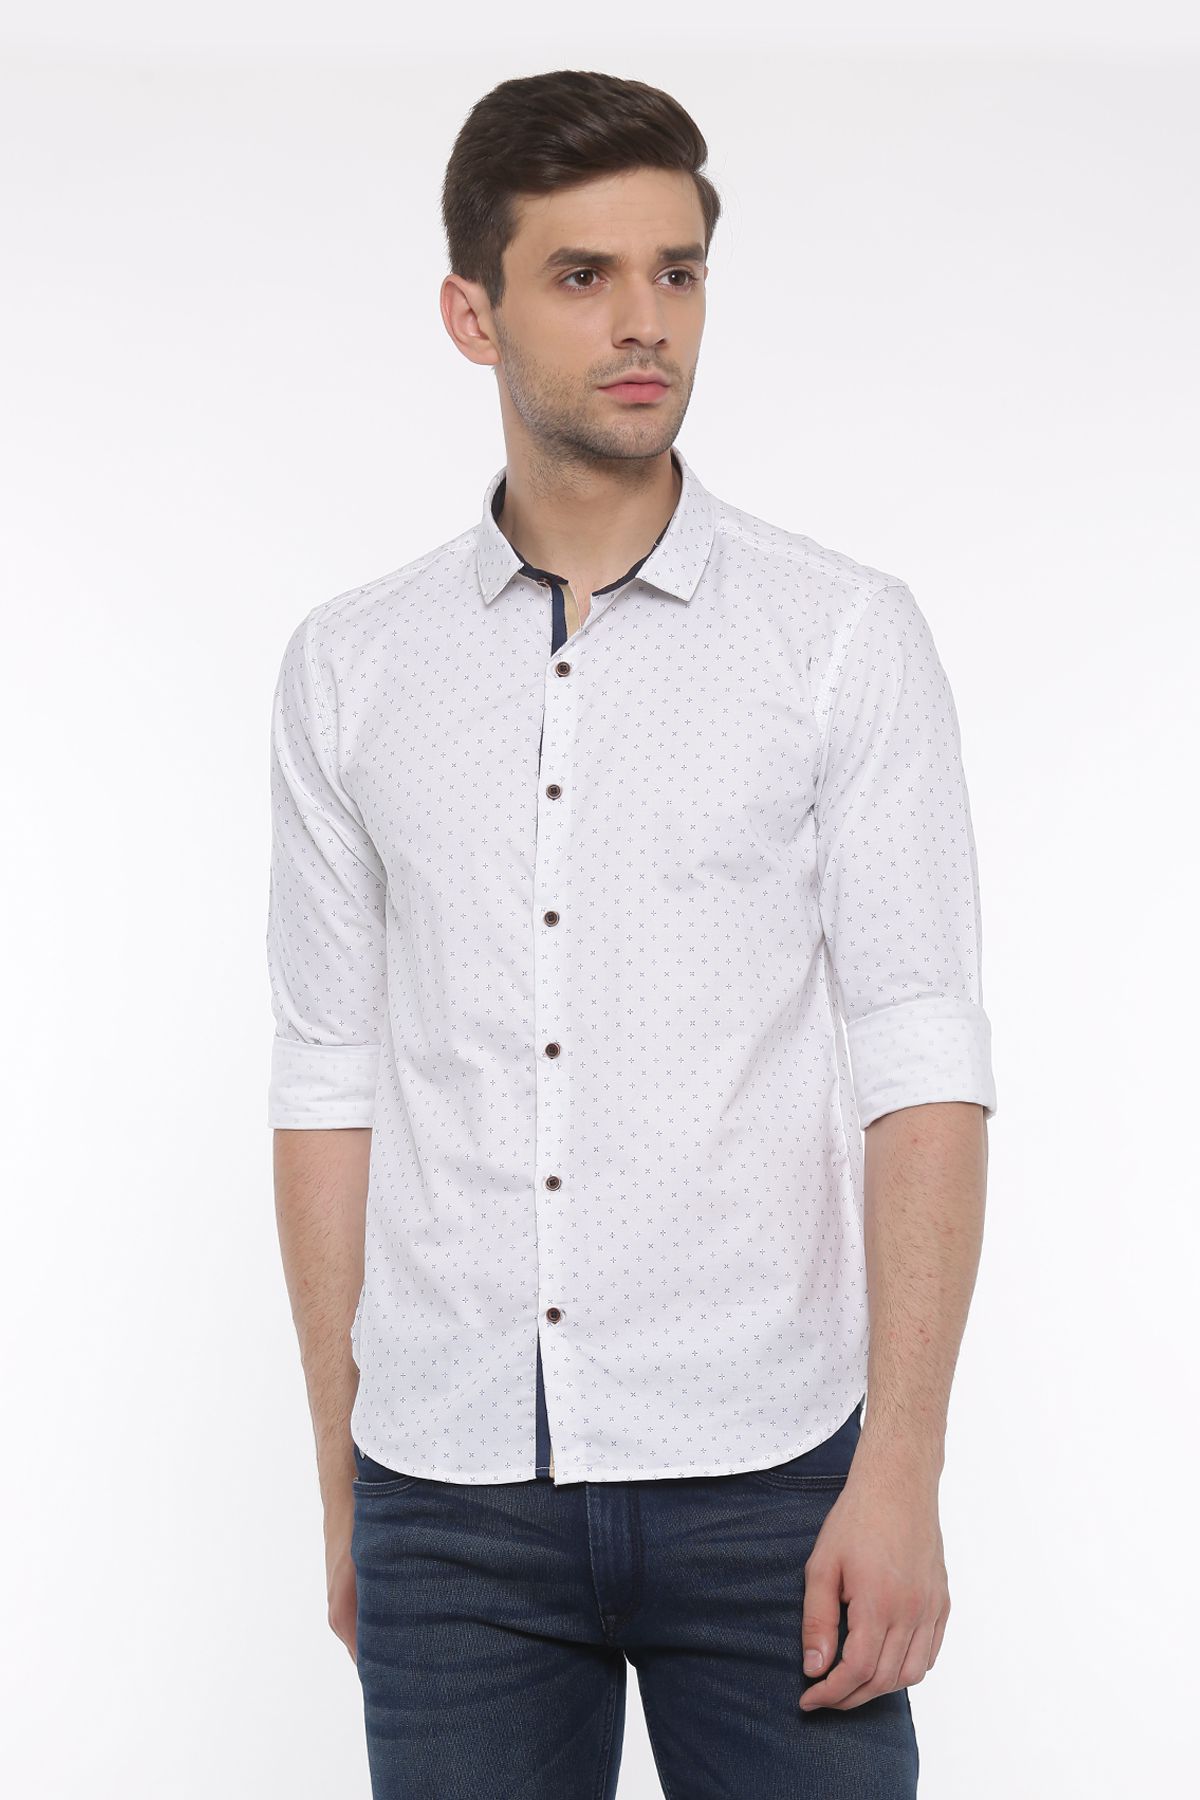 showoff White Slim Fit Shirt - Buy showoff White Slim Fit Shirt Online ...